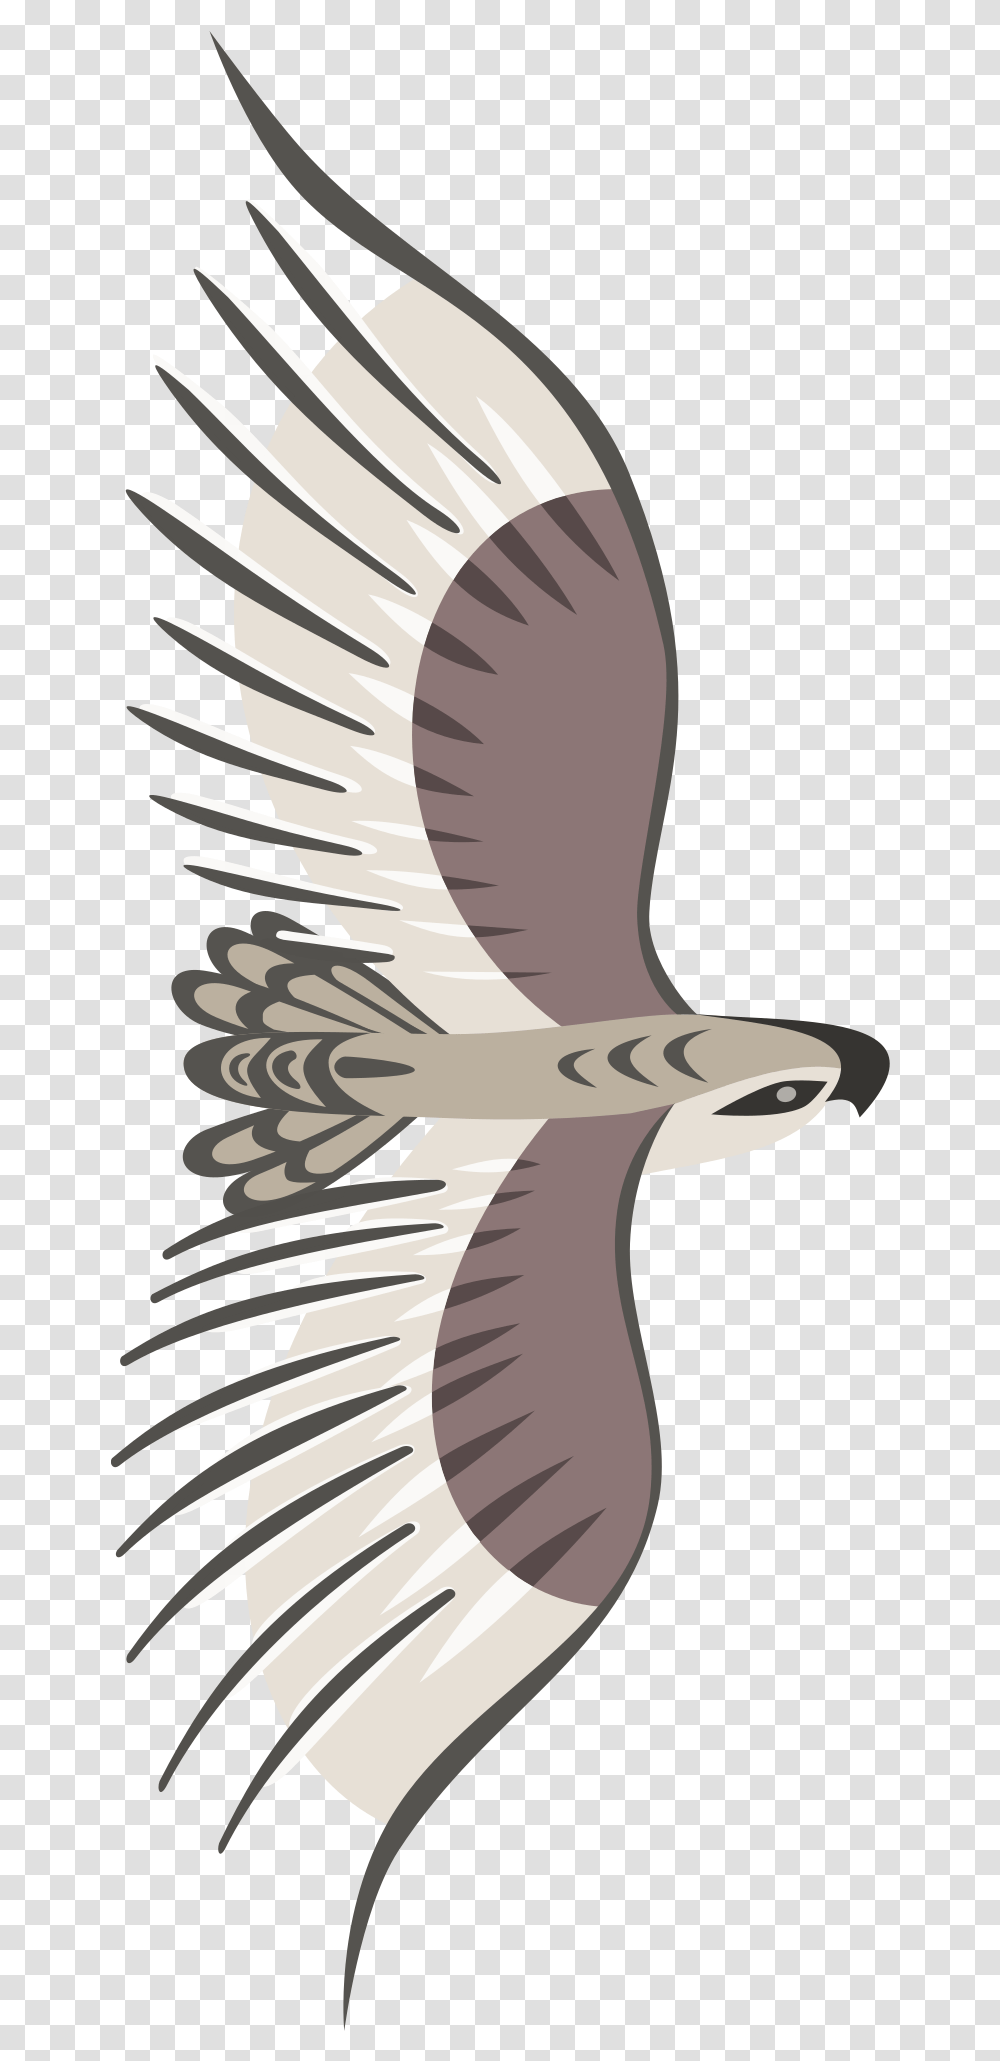 Golden Eagle Clip Arts For Web Clip Arts Free Flying Bird Top View, Vulture, Animal, Condor Transparent Png